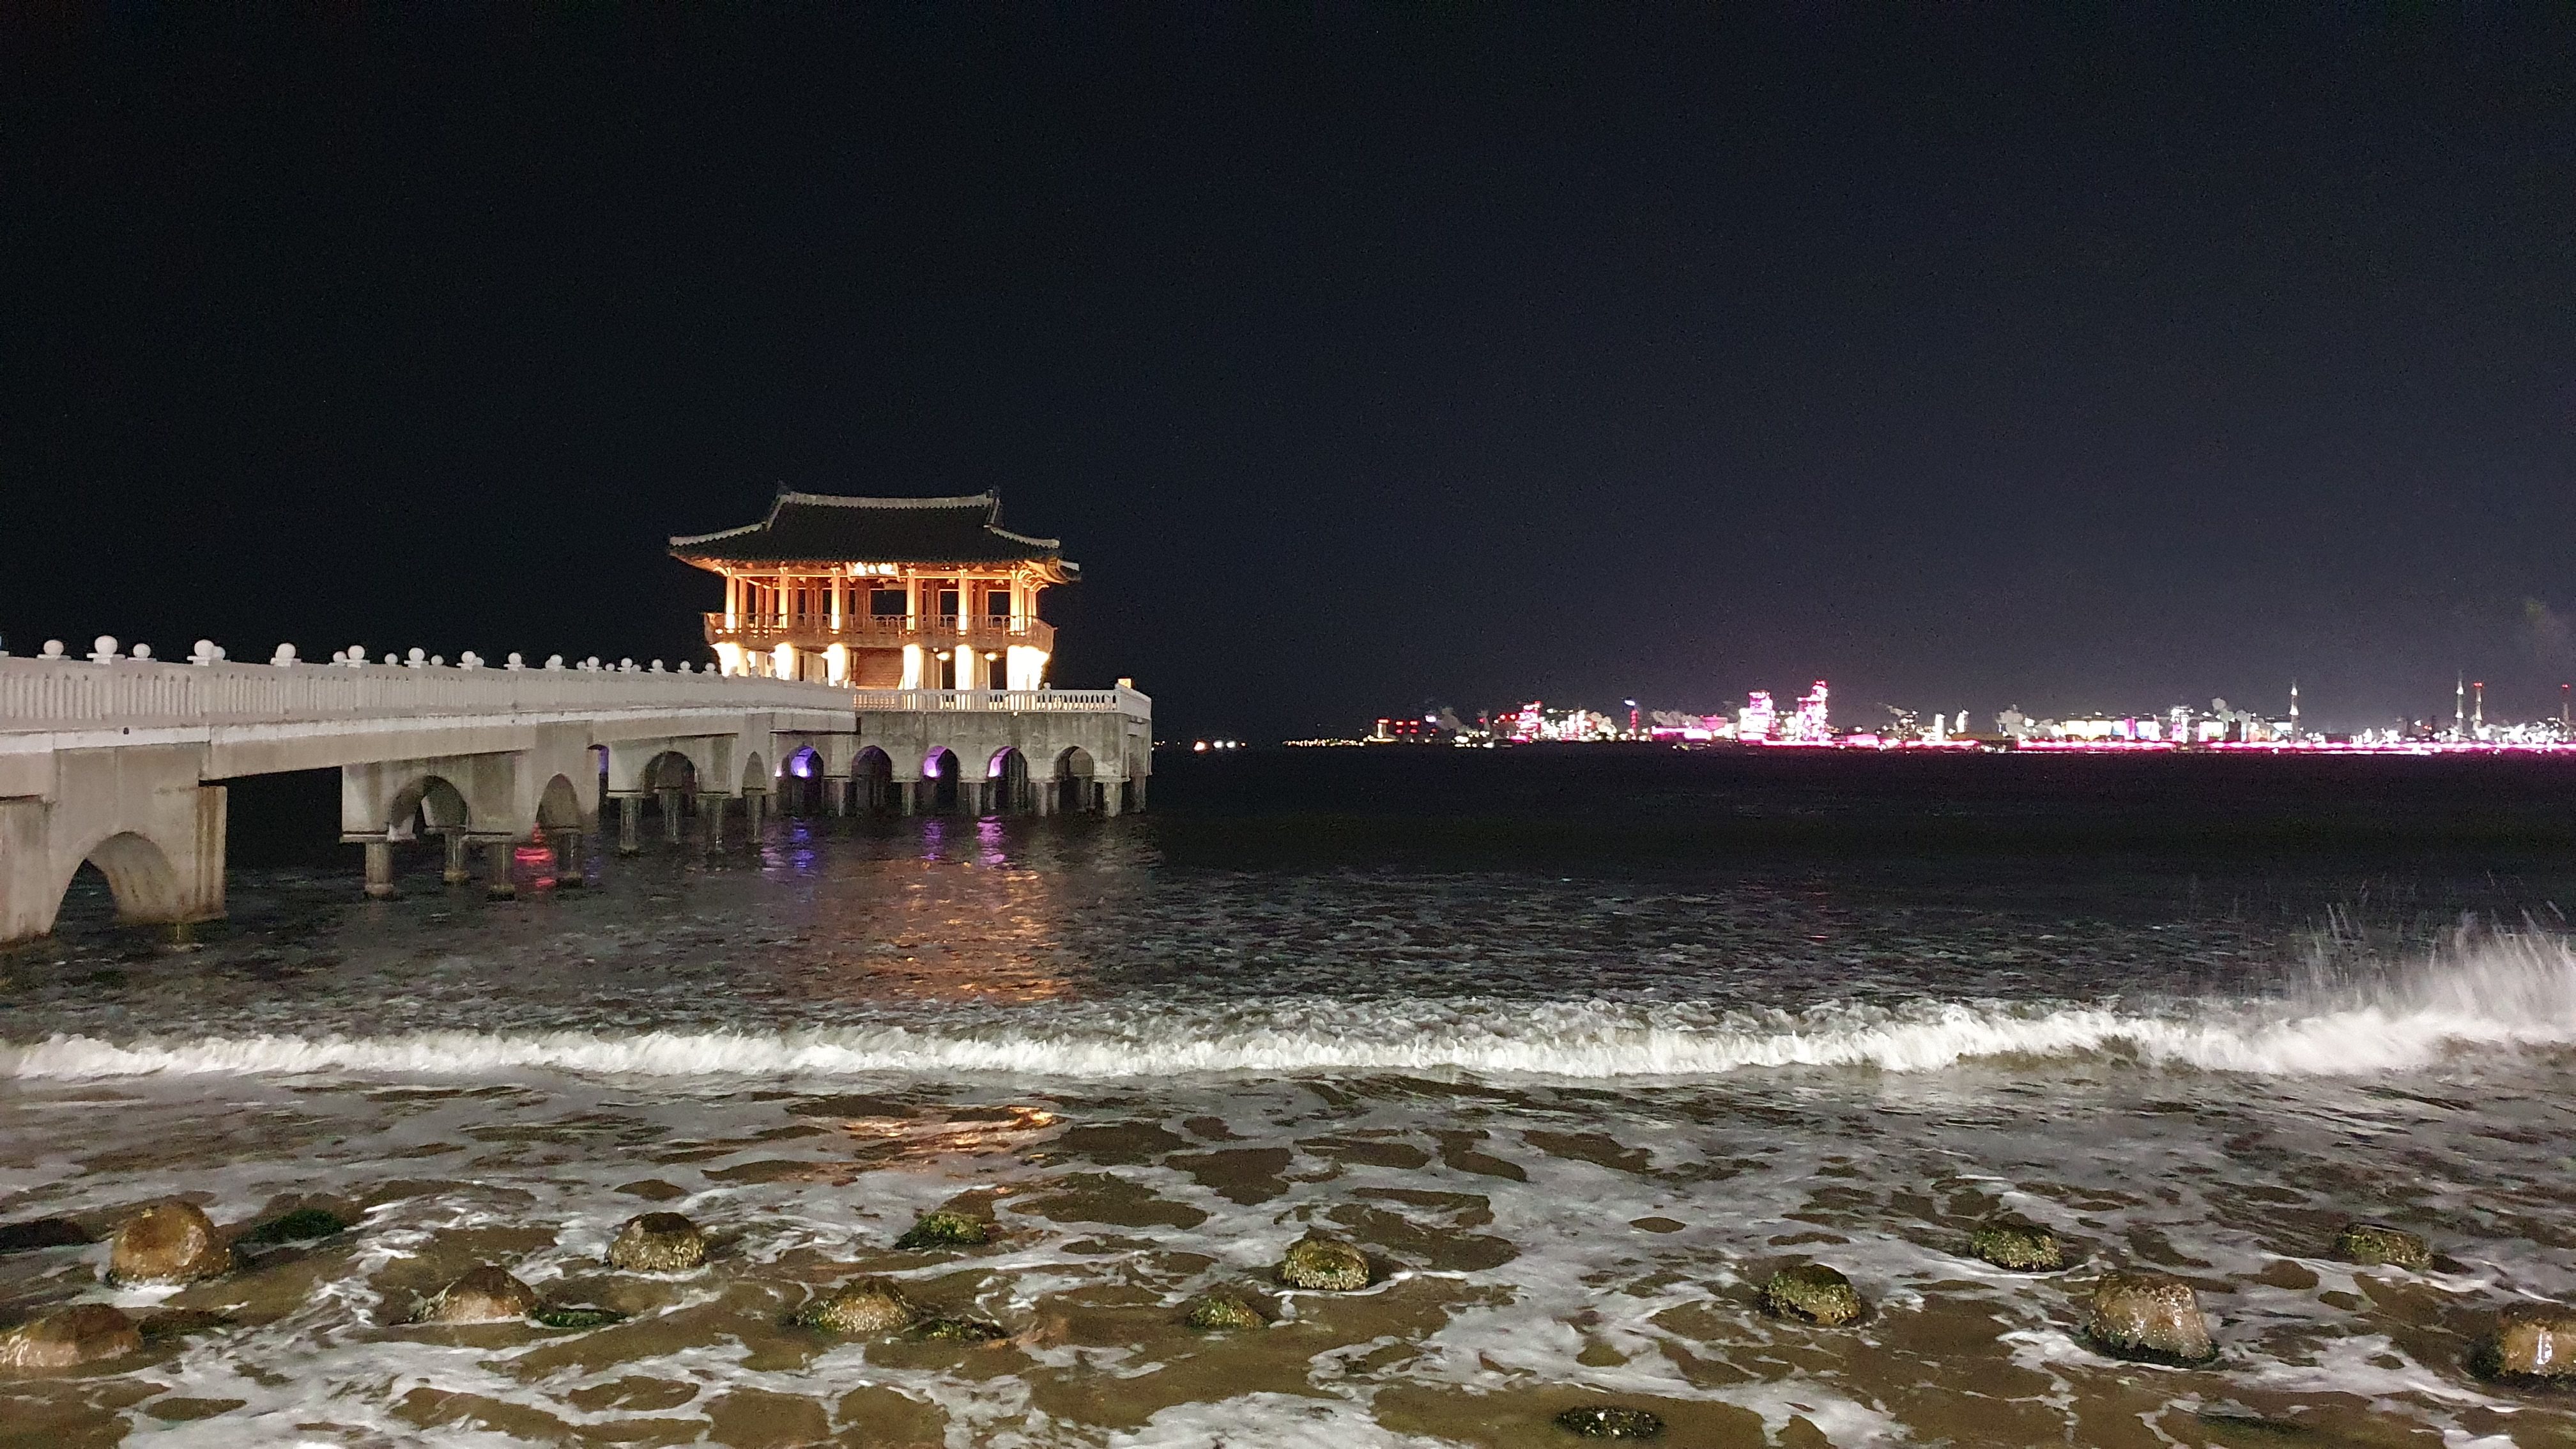 Korean pavilion on Pohang beach at night